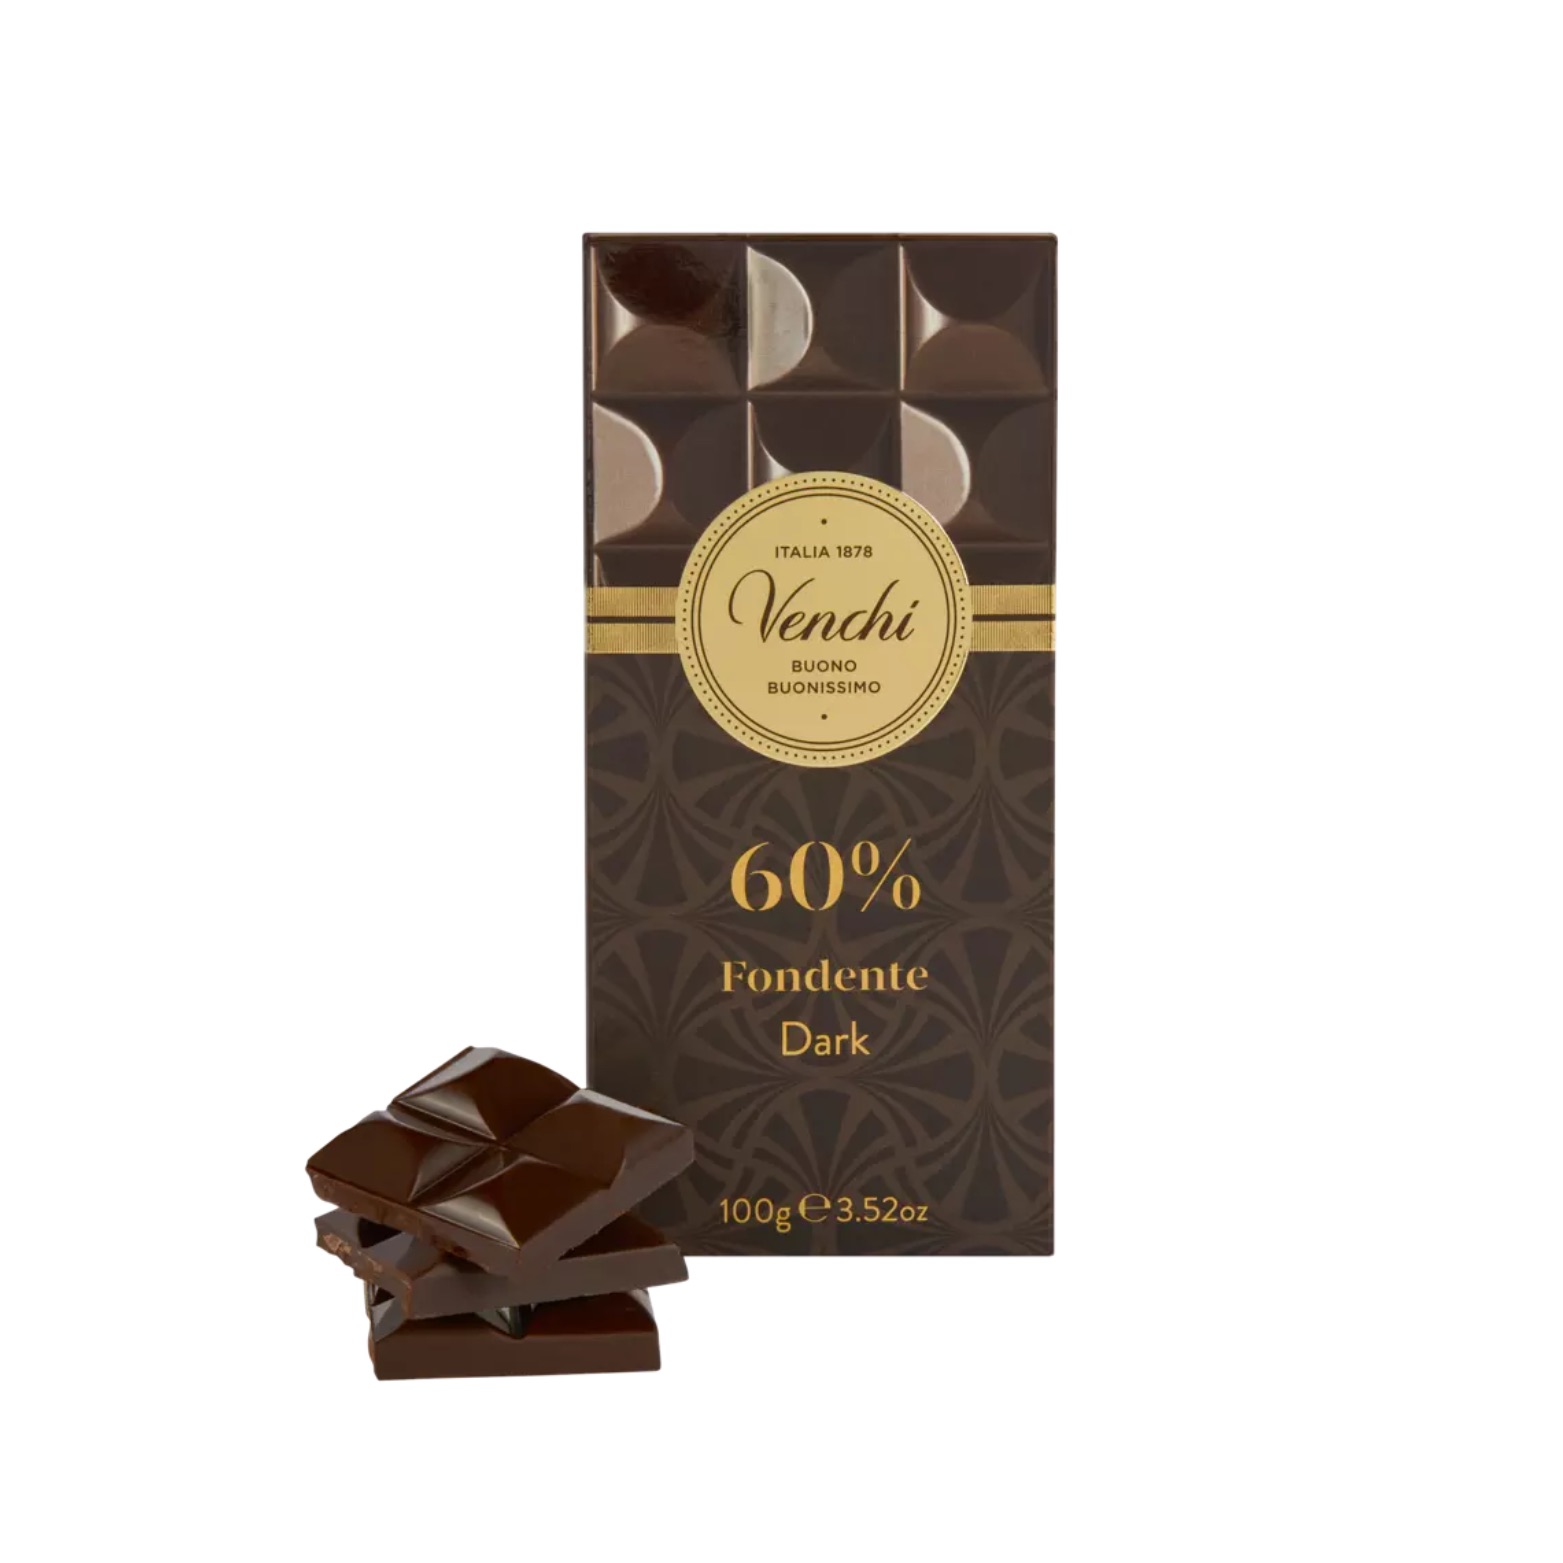 Tafel Zartbitterschokolade Venchi 60%, 100 g. “FONDENTE DARK”